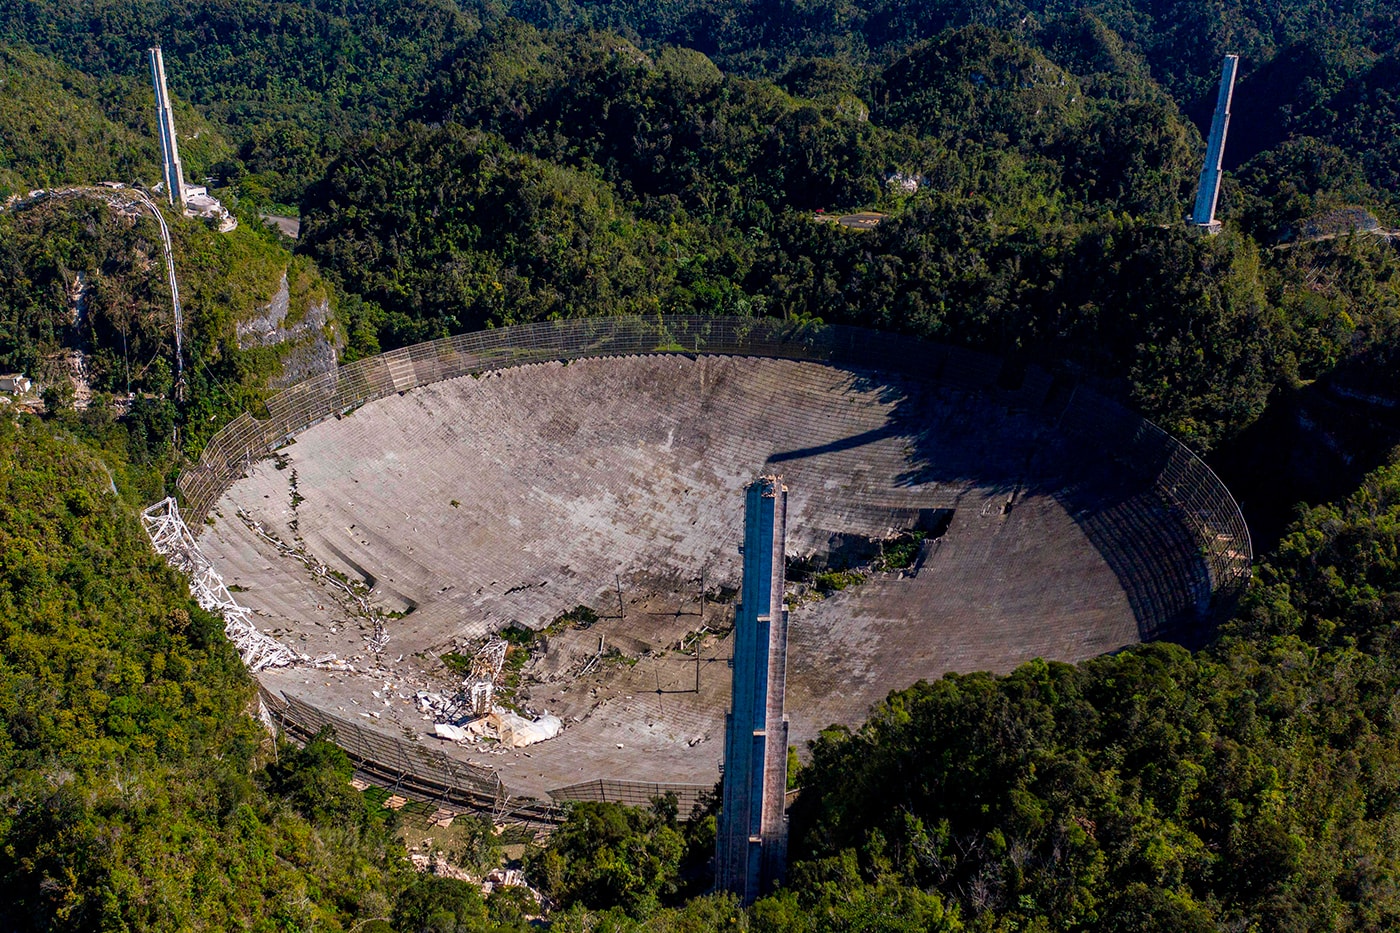 Arecibo Observatory Telescope Collapse News 007 james bond goldeneye science astronomy space radio telescope FAST  puerto rico